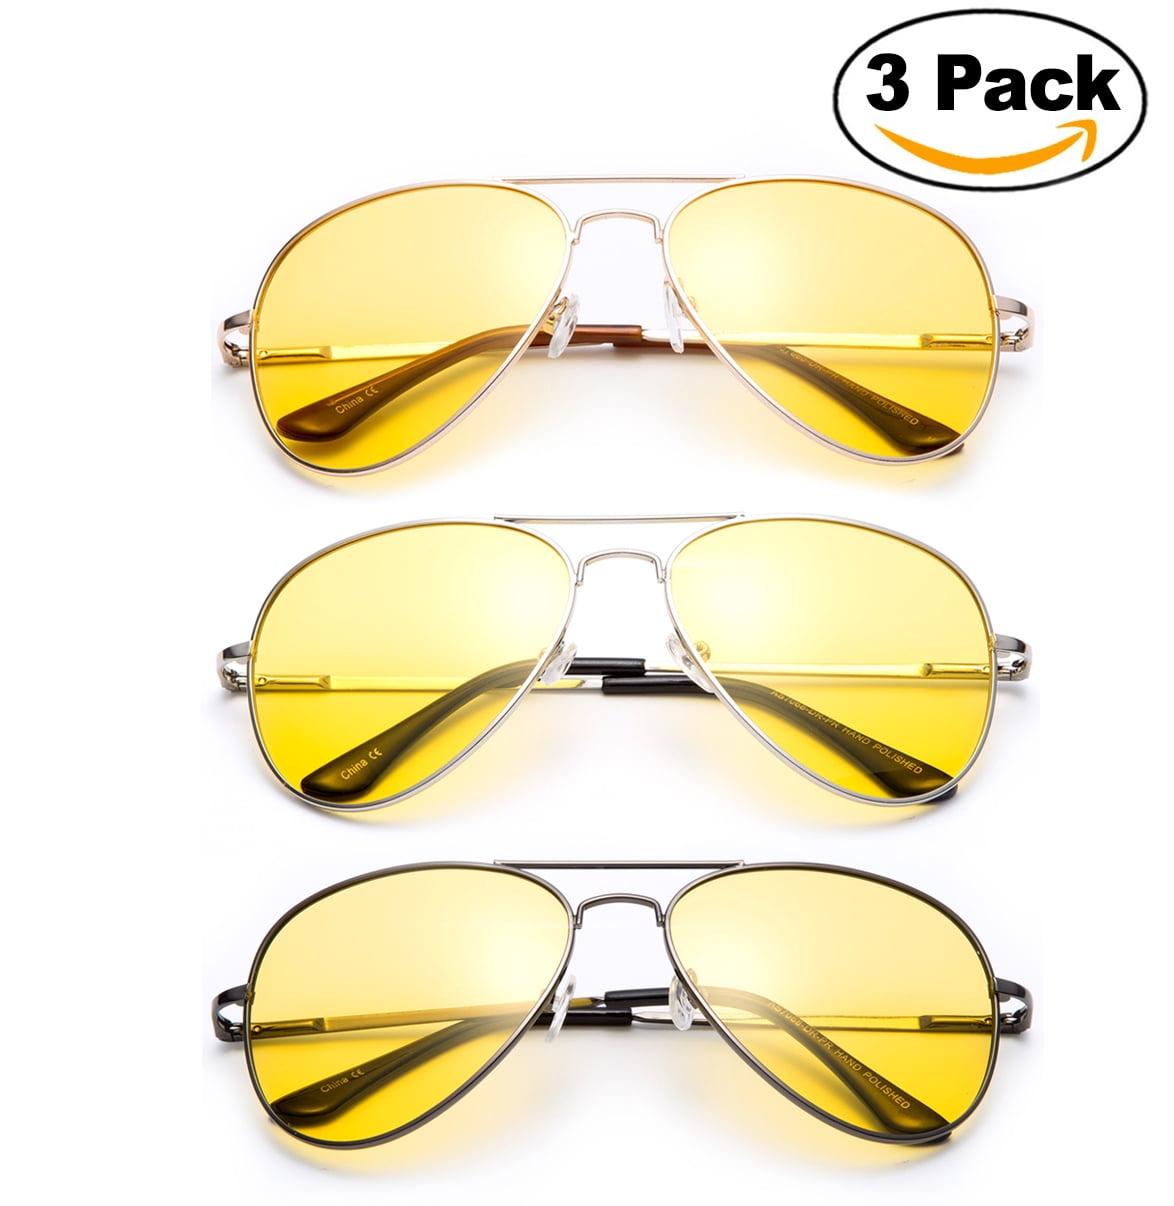 Driving night vision glasses yellow lens UV400 aviator unisex 